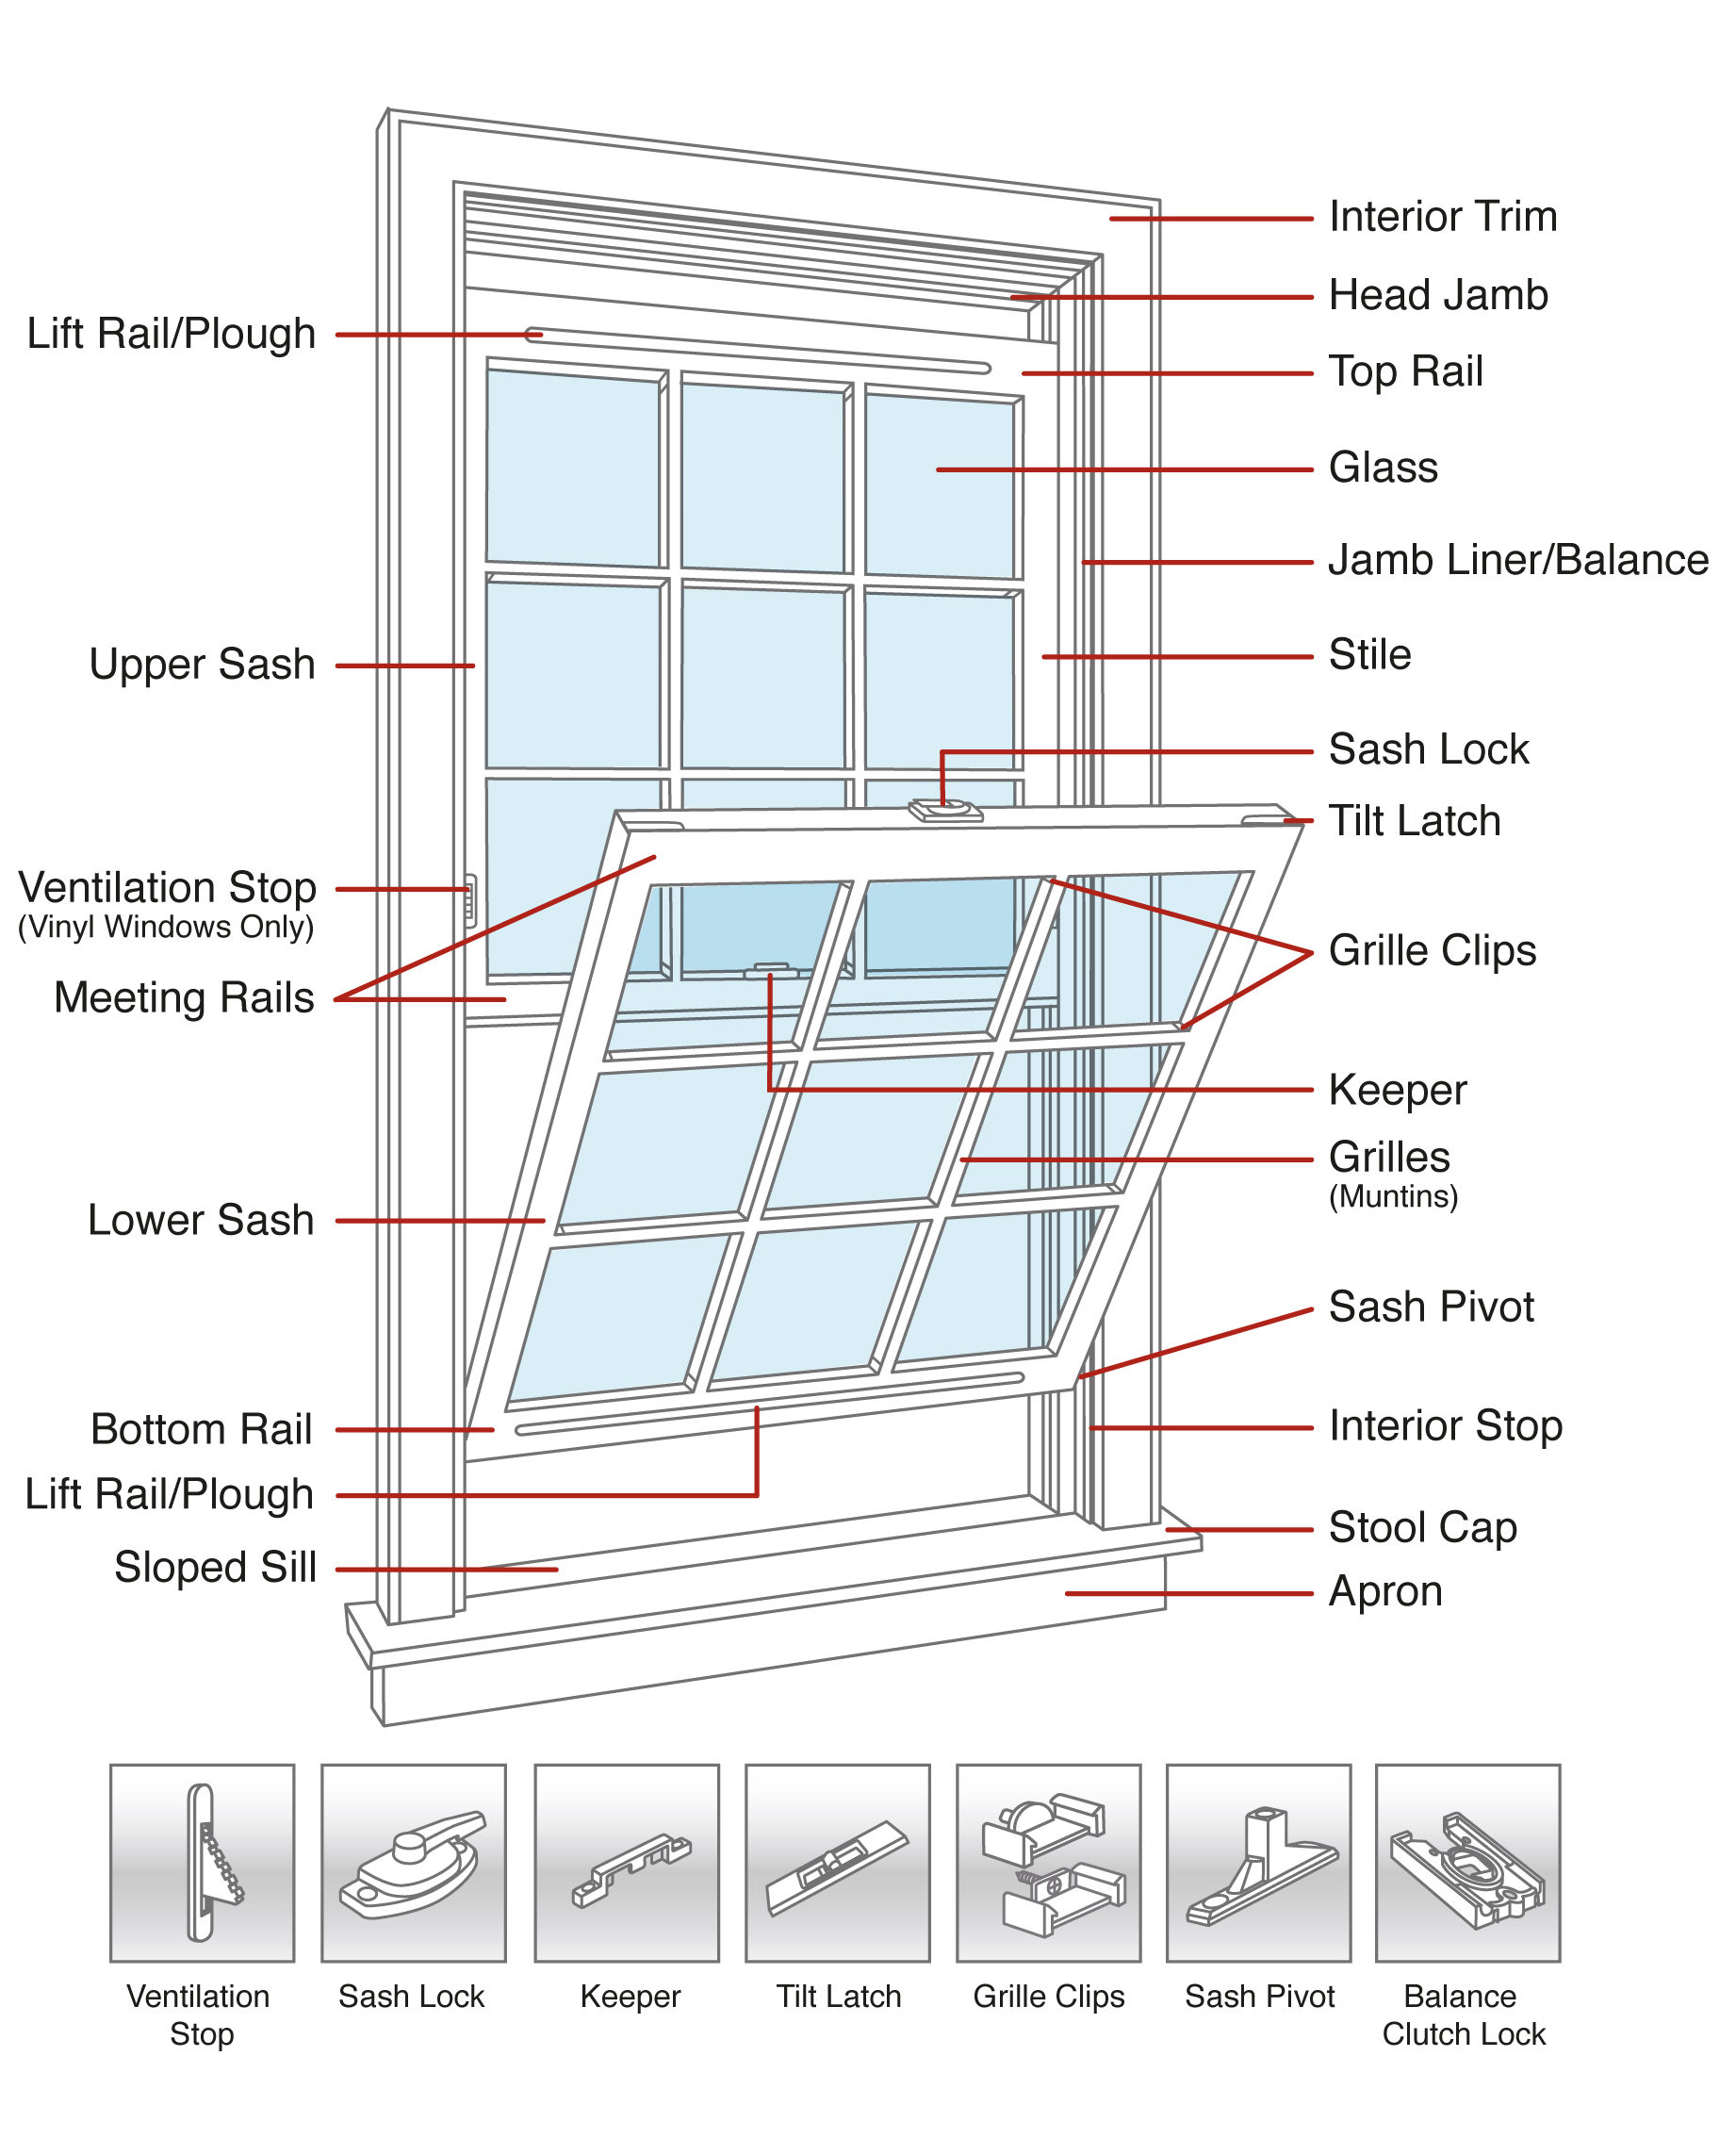 RIVCO Window Diagrams from The Window Medics